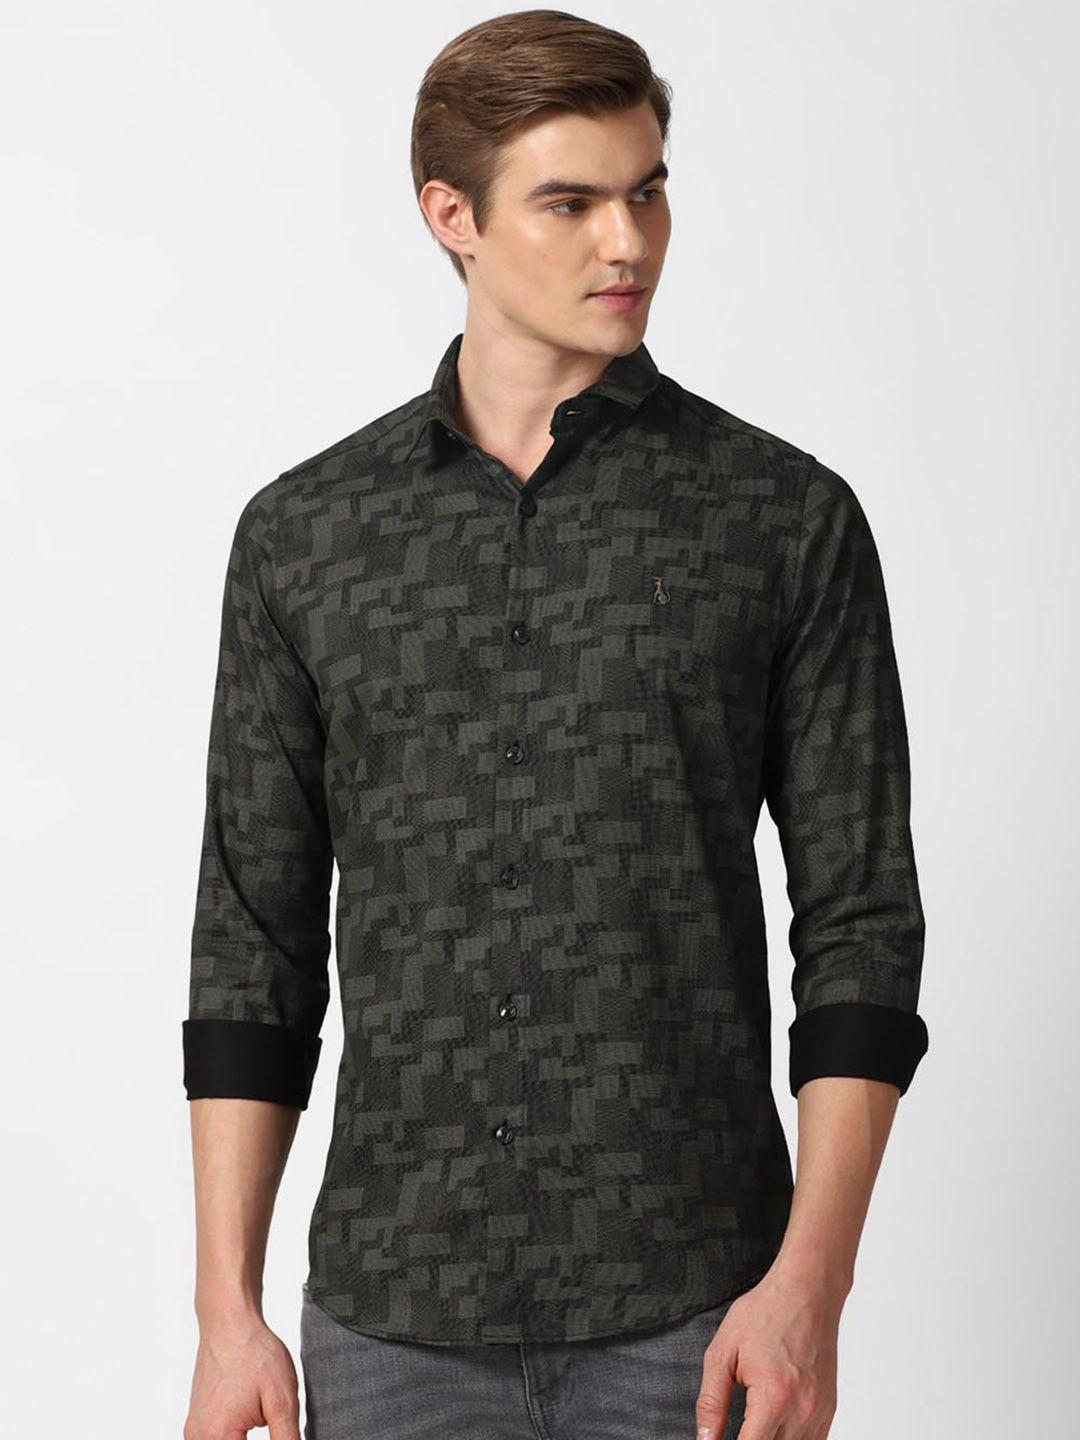 simon carter london slim fit geometric printed pure cotton casual shirt